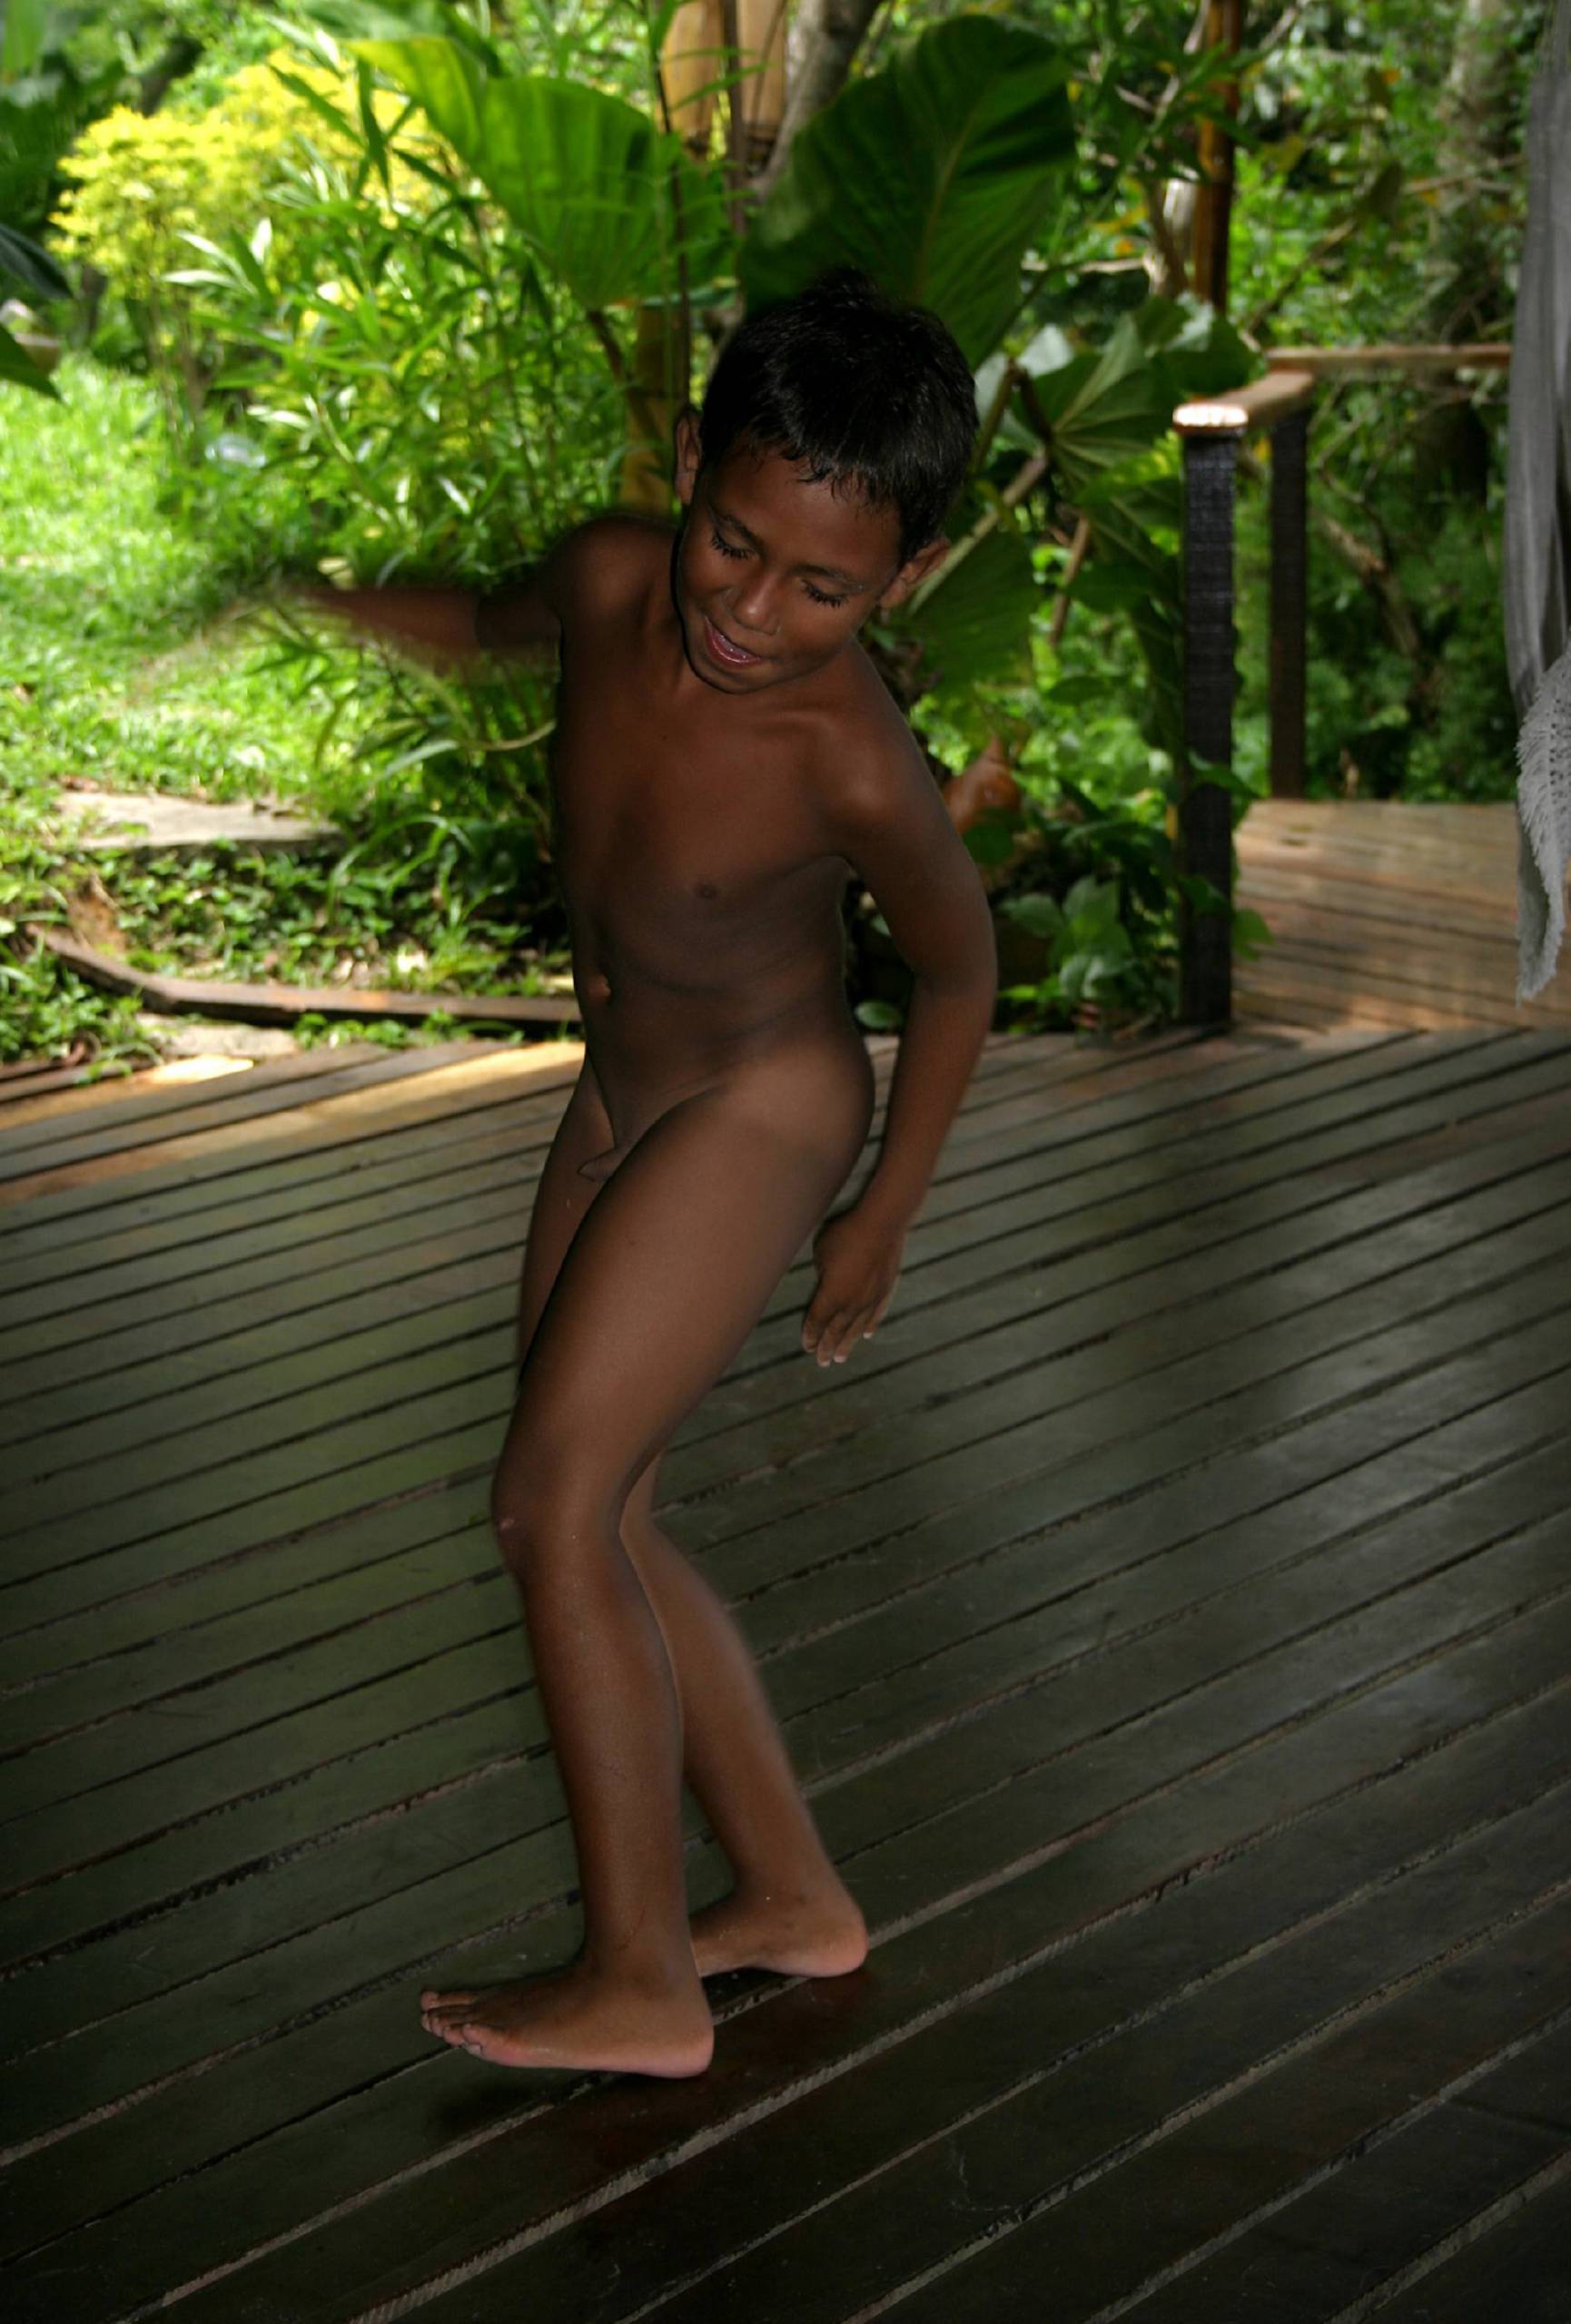 Nudist Pics Sheds Dance Partnership - 2